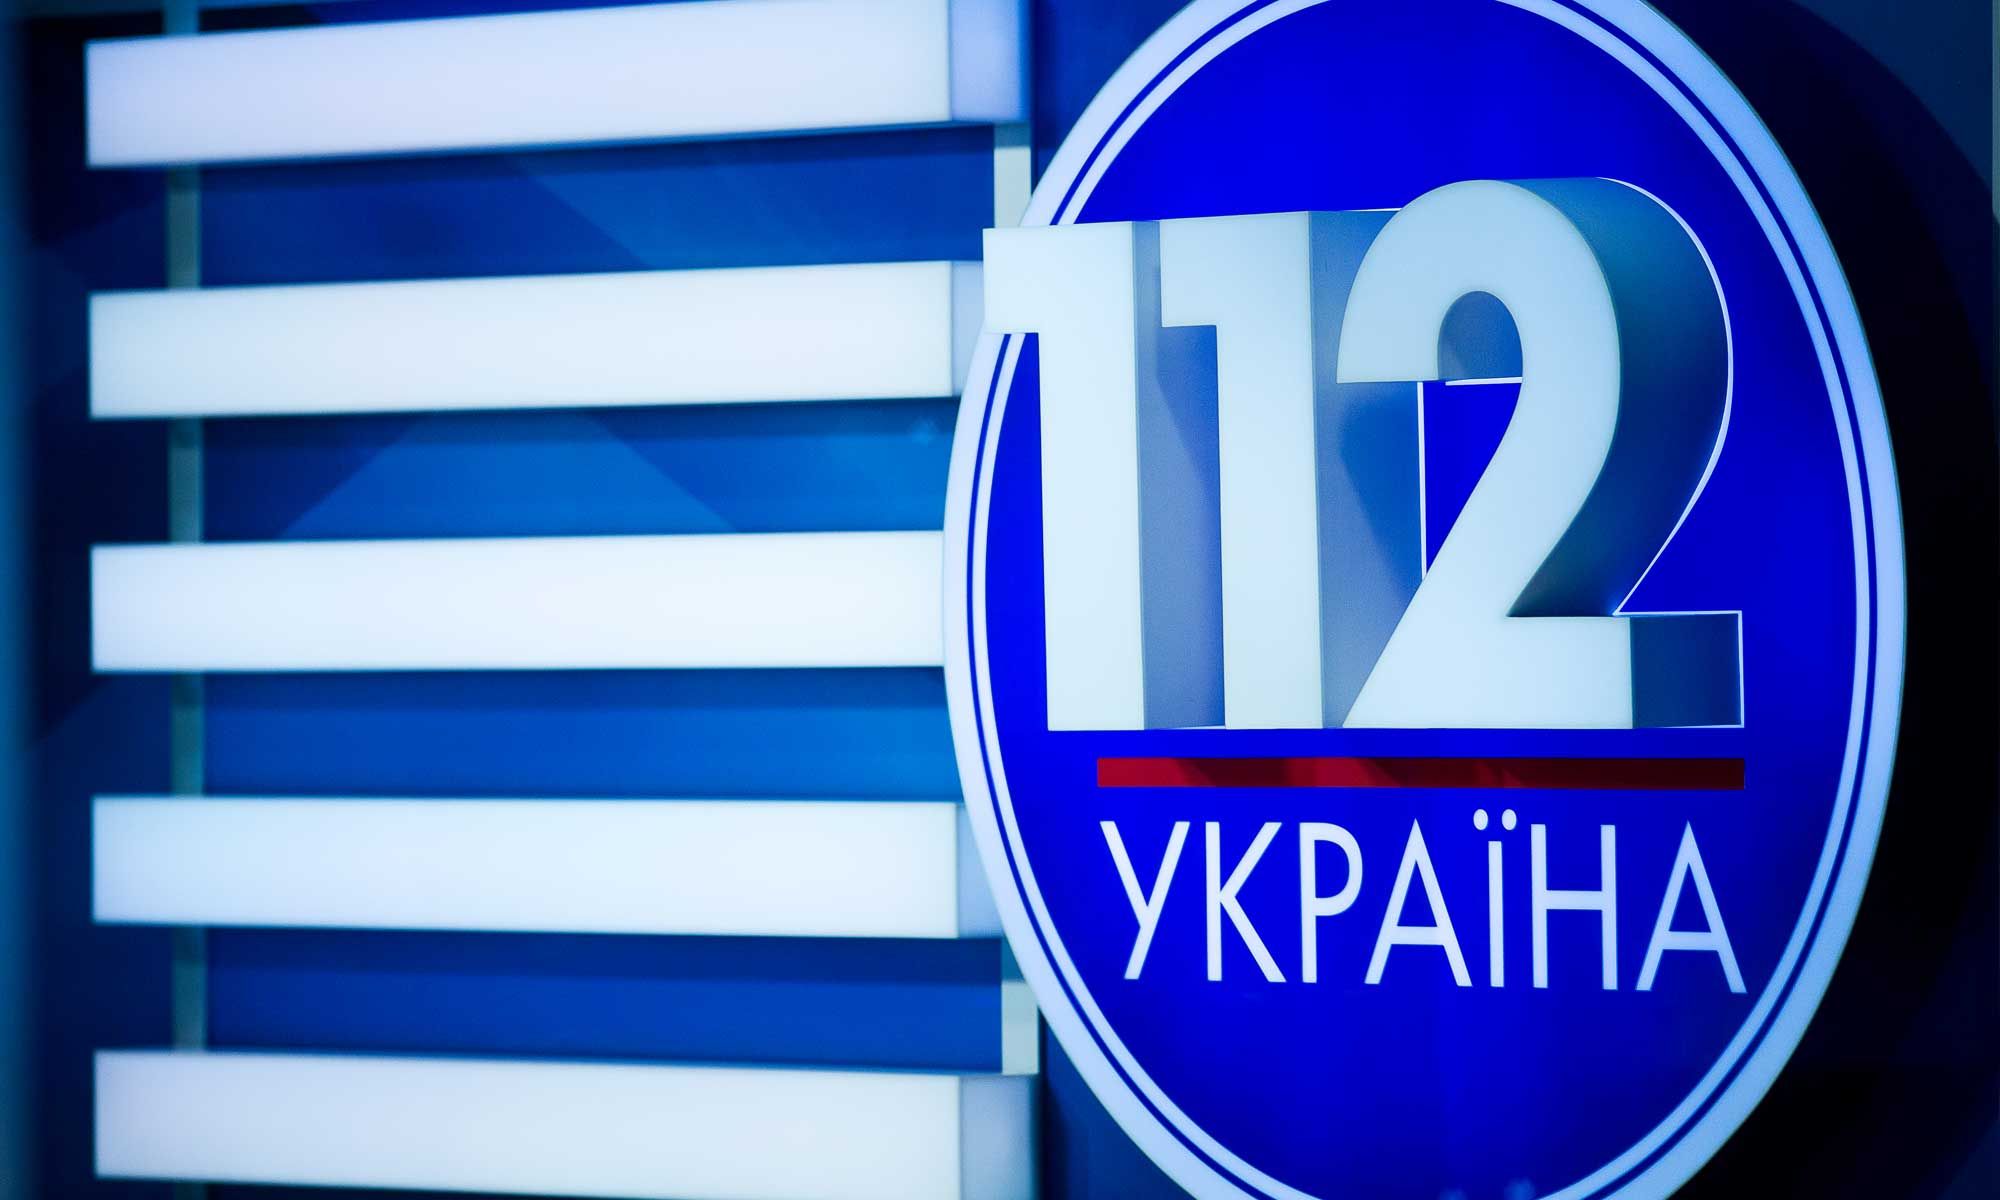 Онлайн-трансляция ютуб-канала 112 Украина заблокирована: все детали